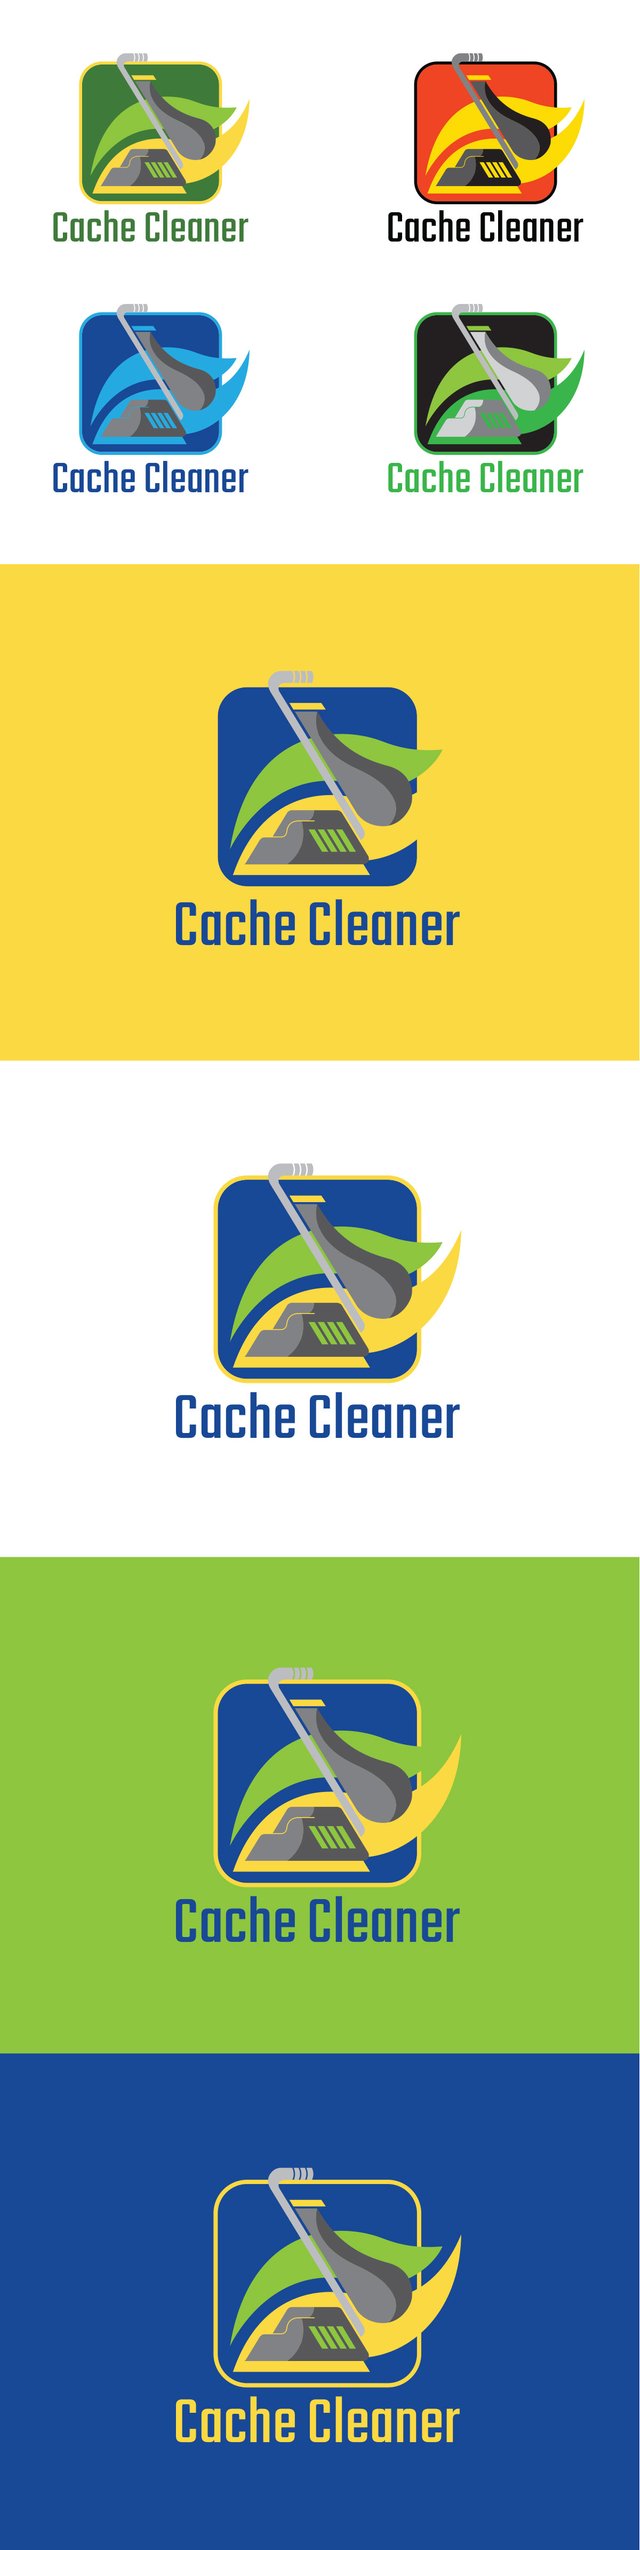 Cache-Cleaner-2.jpg